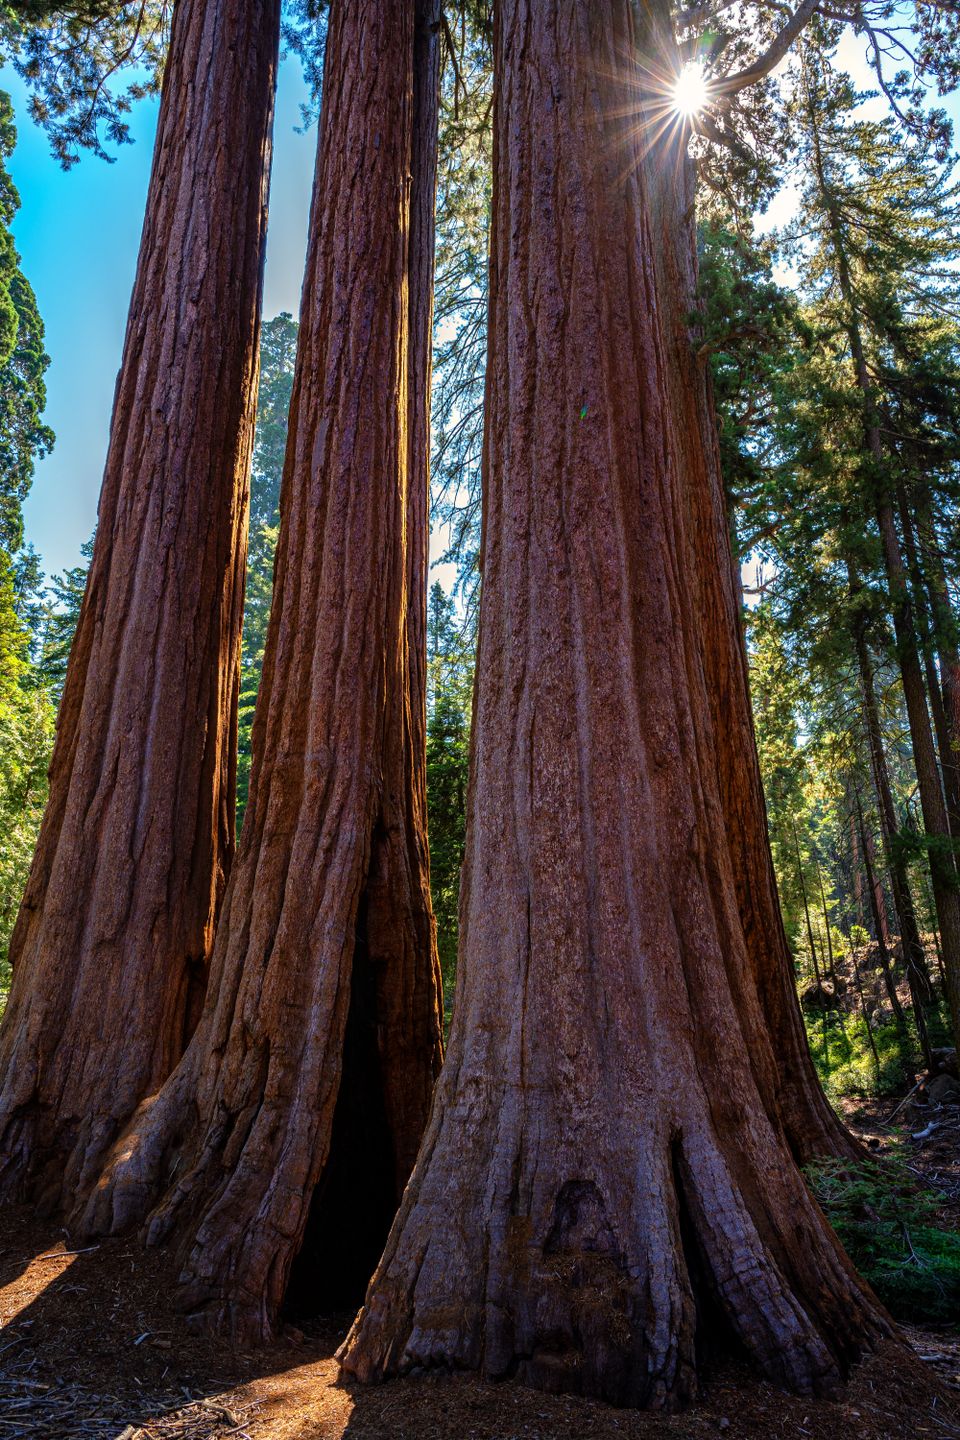 The Sequoia King